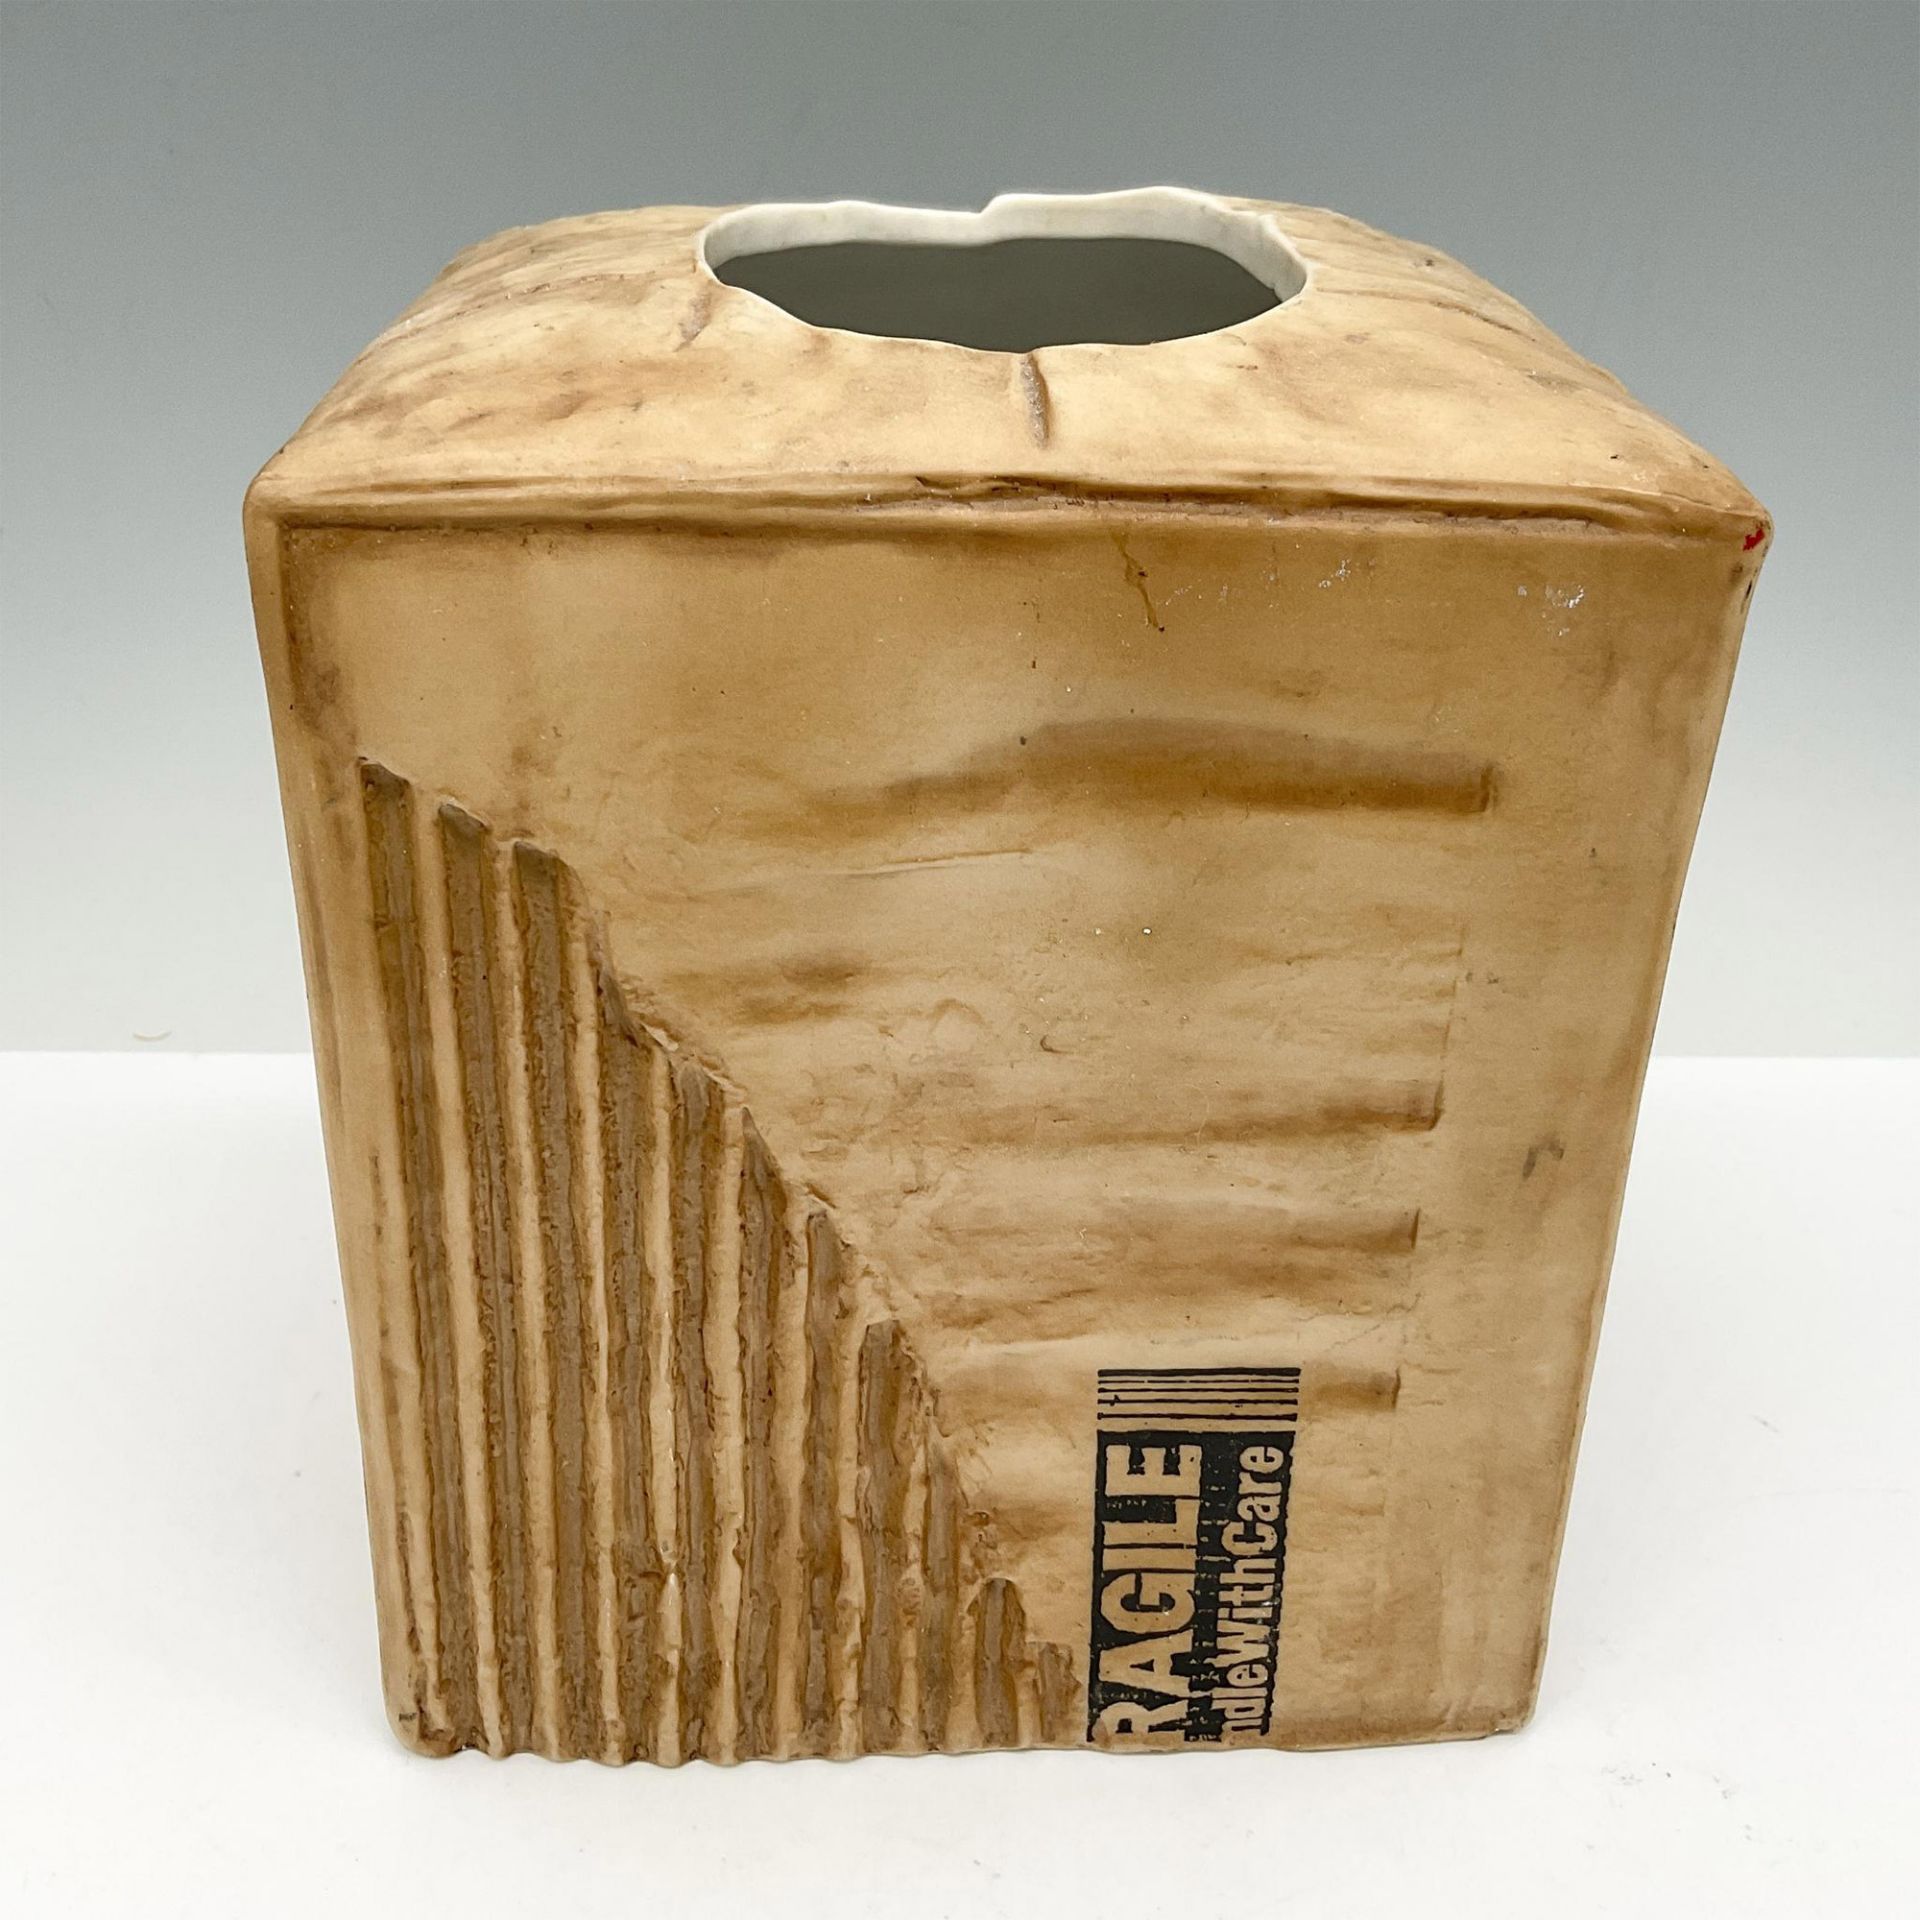 First Coast Designs Ceramic Tissue Box Holder - Image 2 of 4